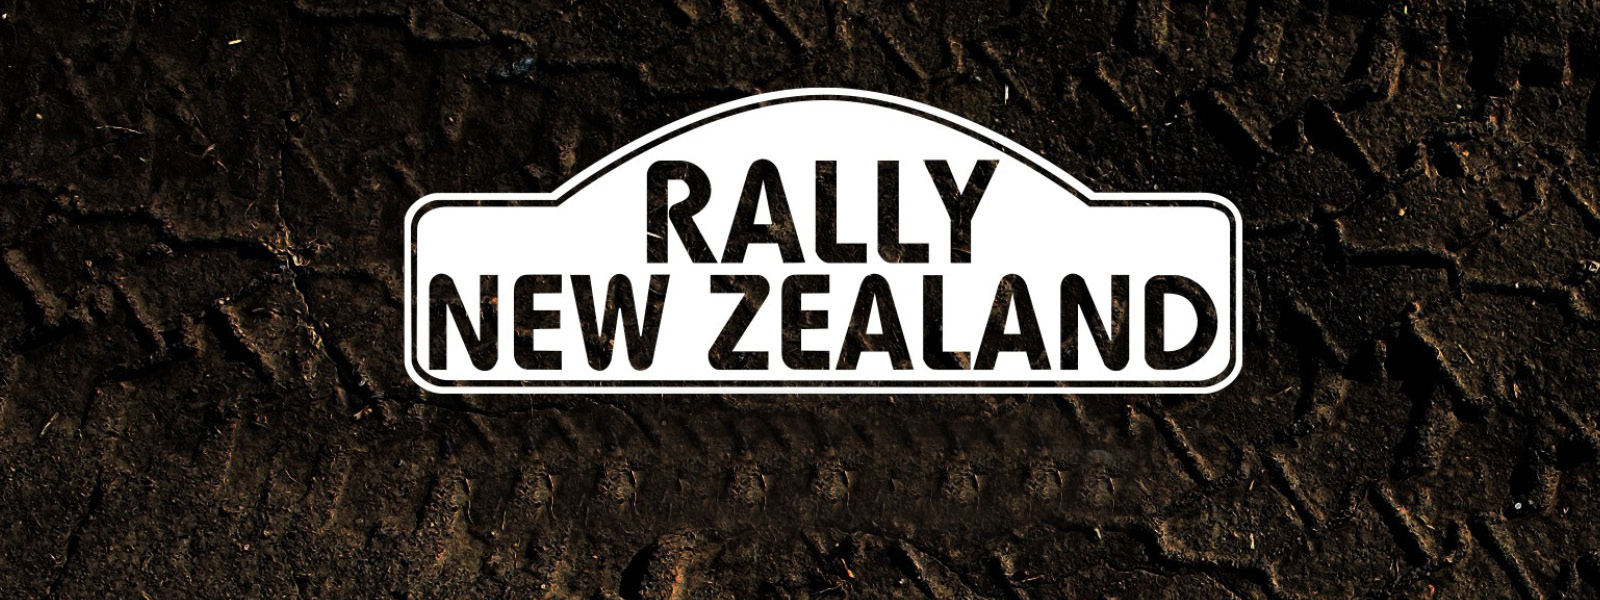 FIA World Rally Championship 2020 Cancelled